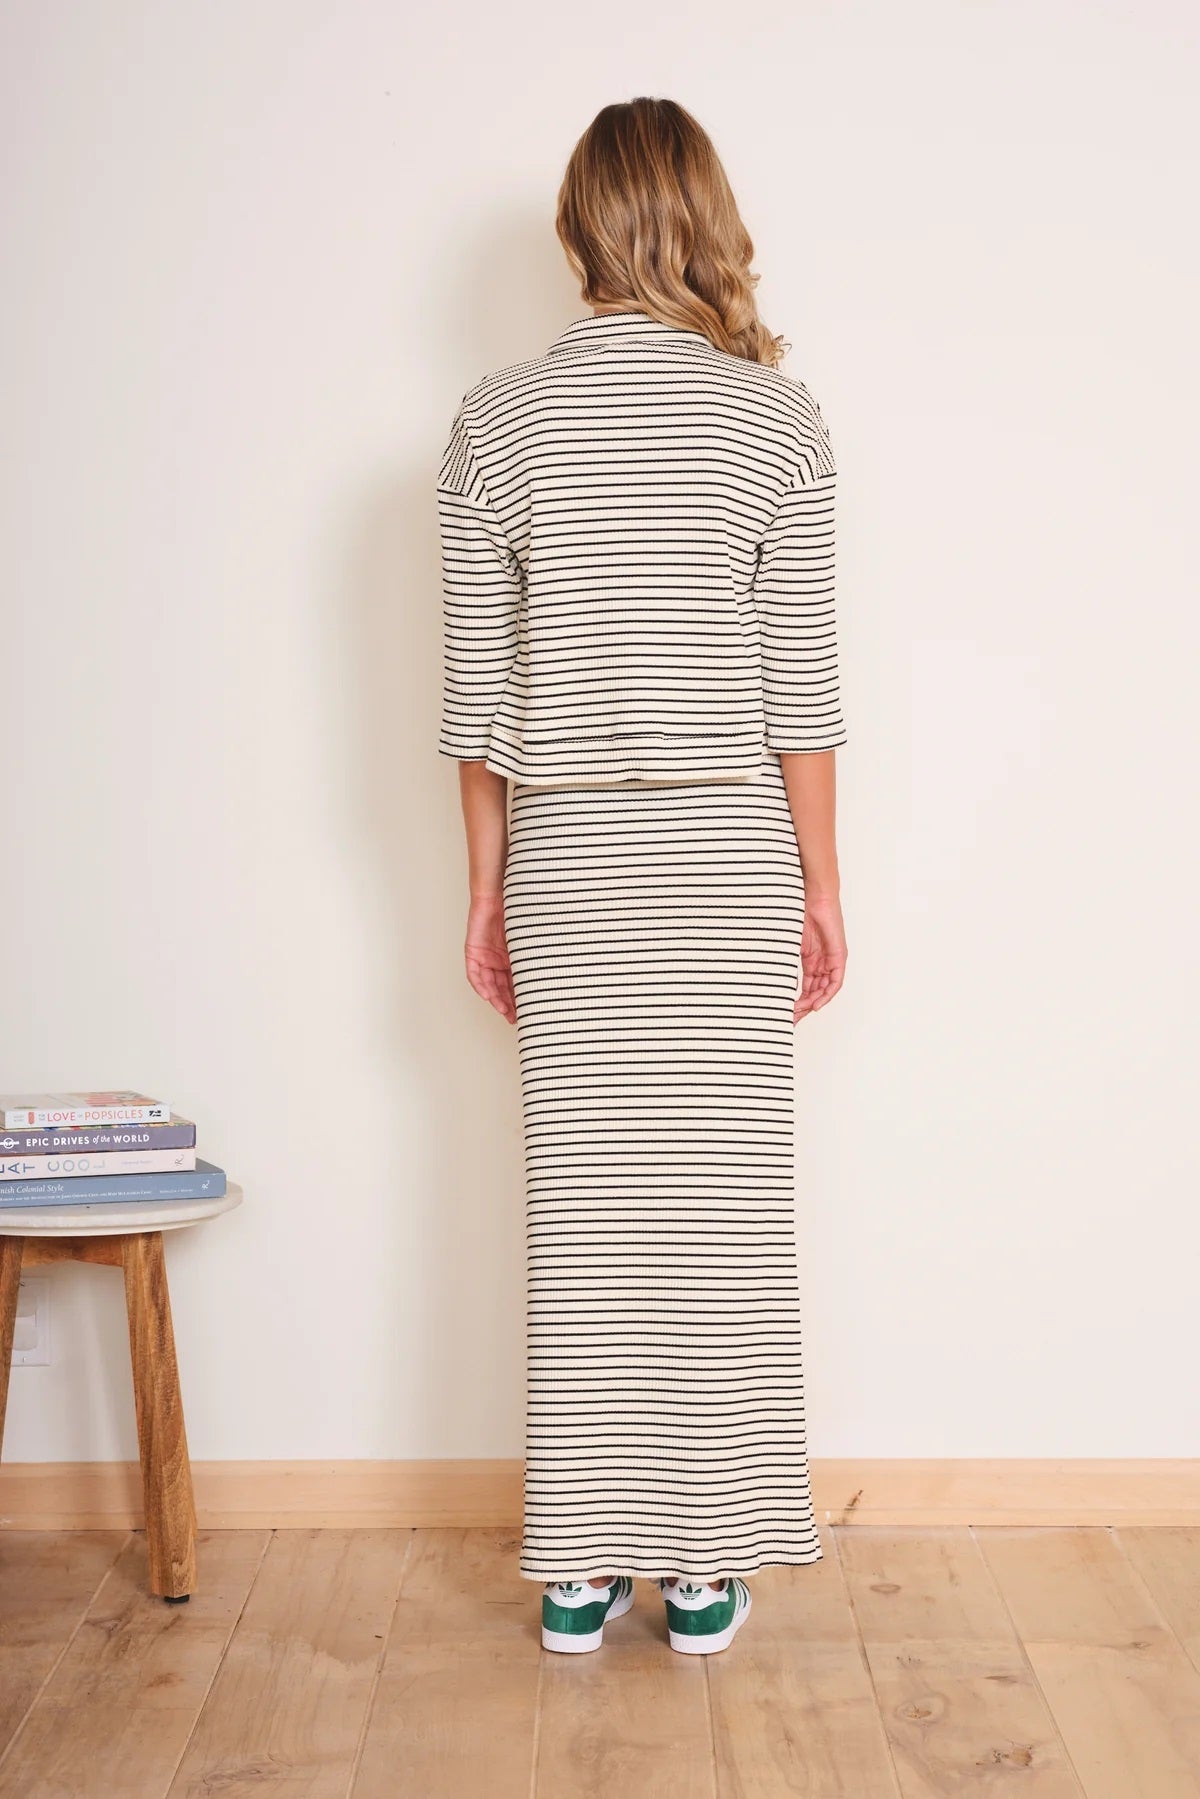 dRA Clothing Los Angeles, Lugo Maxi Skirt in Ivory Black Stripe - Boutique Dandelion